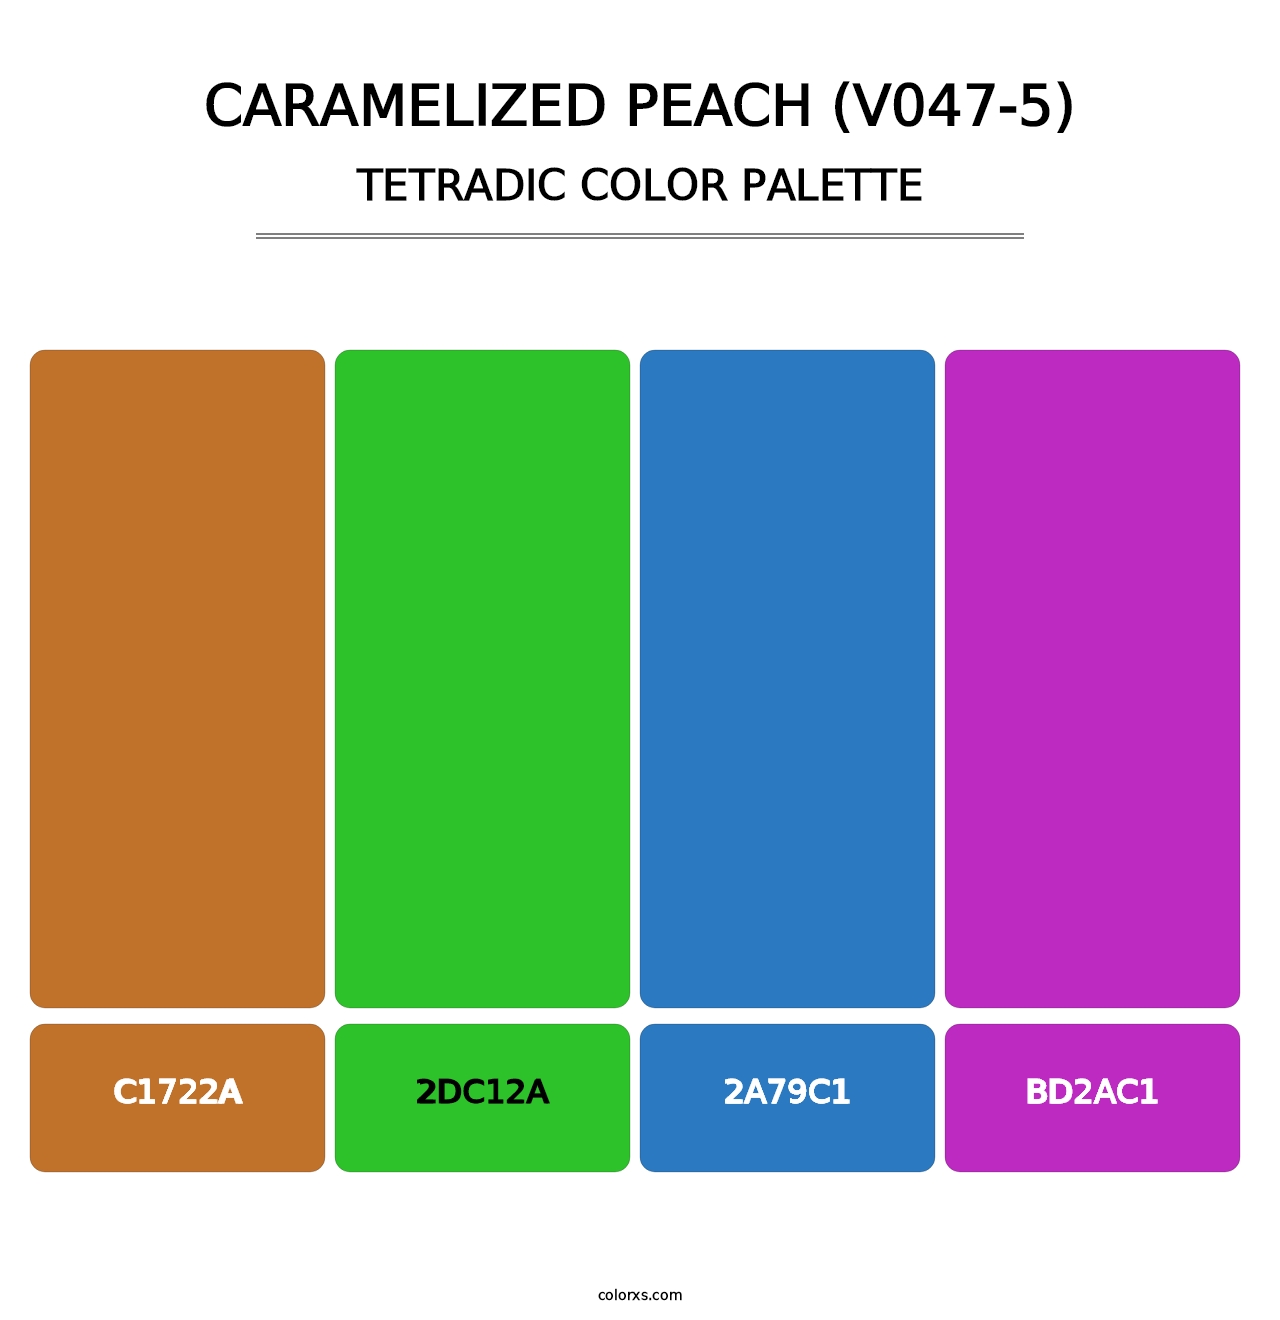 Caramelized Peach (V047-5) - Tetradic Color Palette